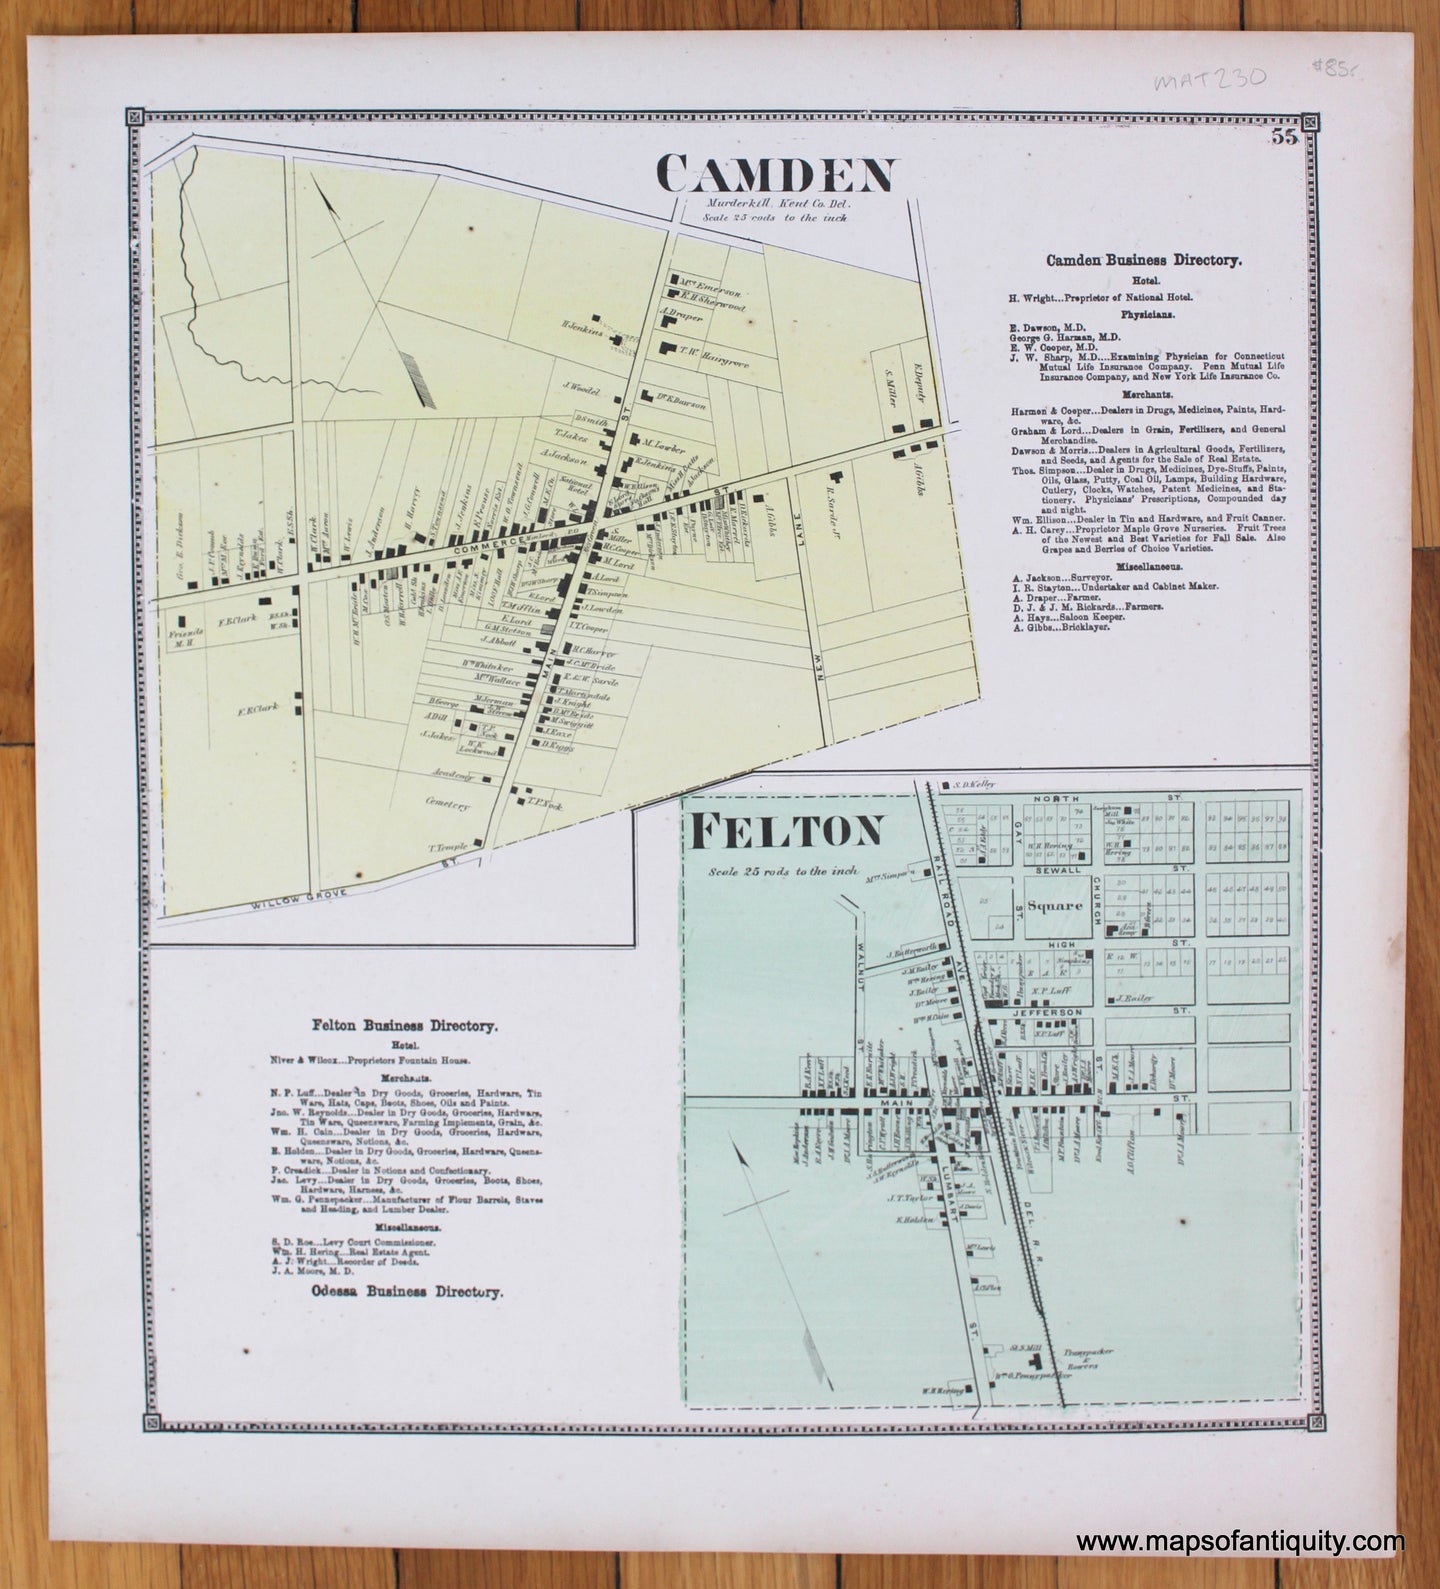 Camden-Felton-Antique-Map-1868-Beers-1860s-1800s-19th-century-Maps-of-Antiquity